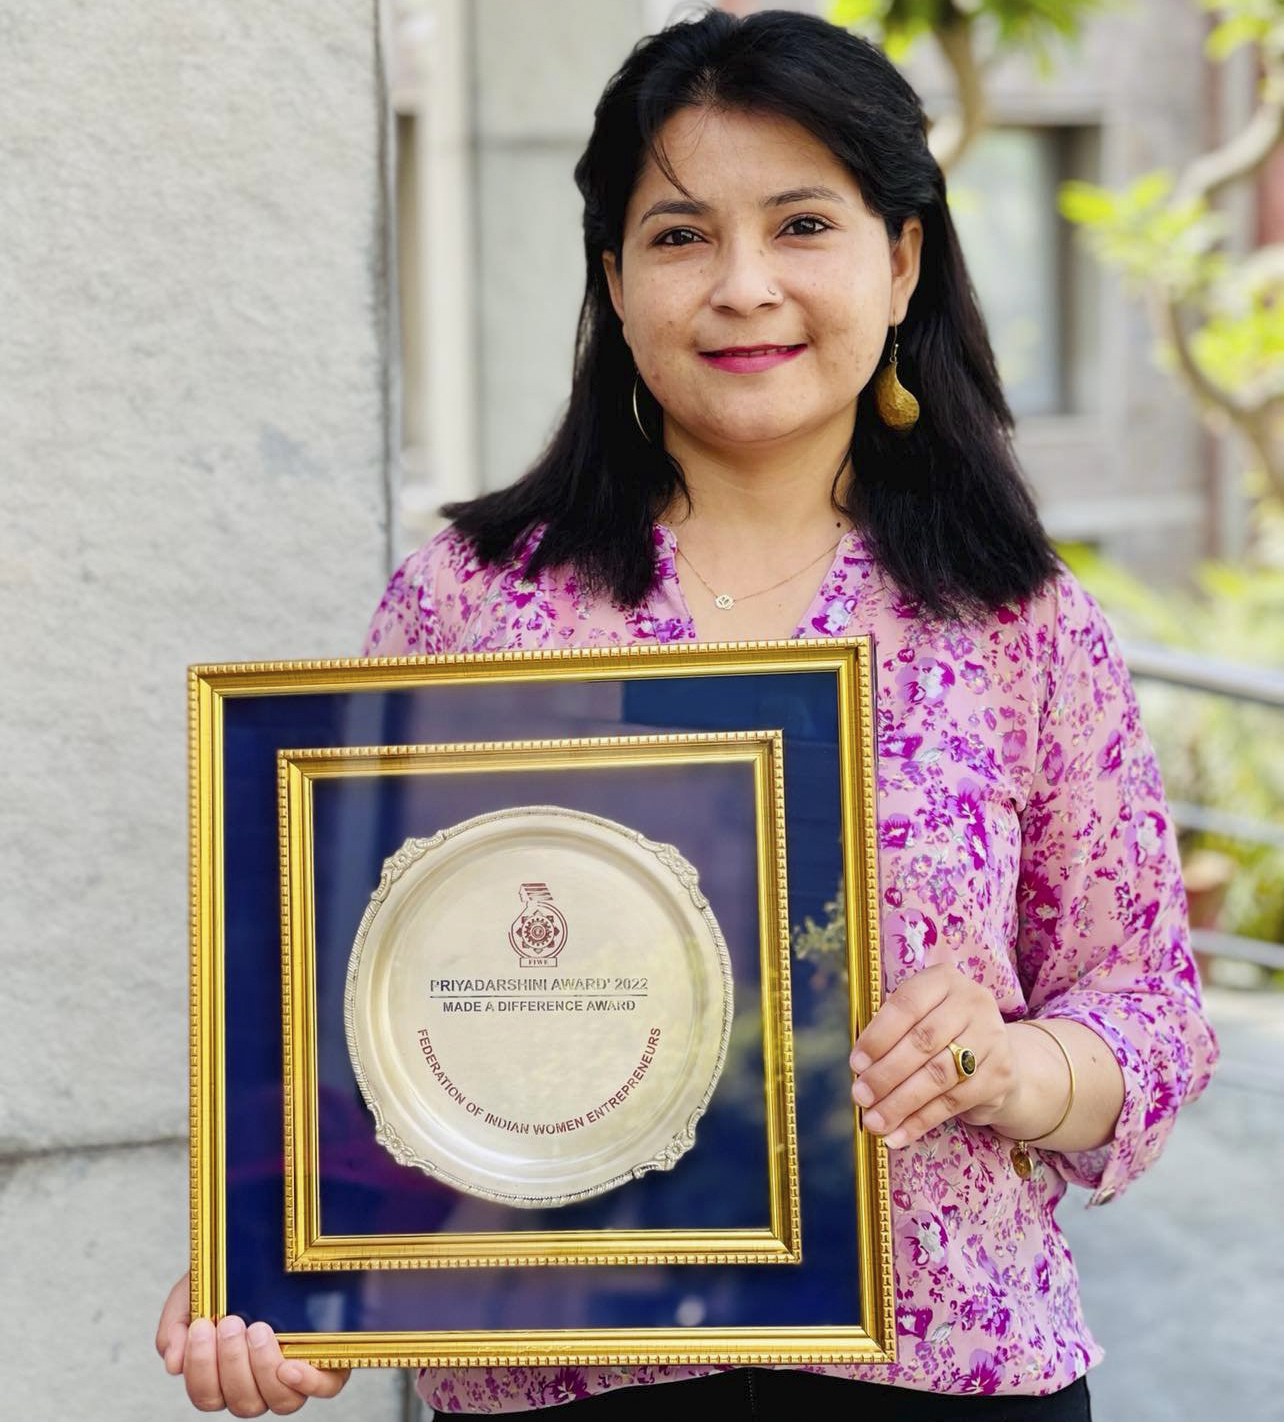 Nepali entrepreneur Prakriti Mainali receives the Priyadarshini Award by the Indian government and Federation of Indian Women Entrepreneurs, in New Delhi, in March 2022. Photo: Gokul Subedi